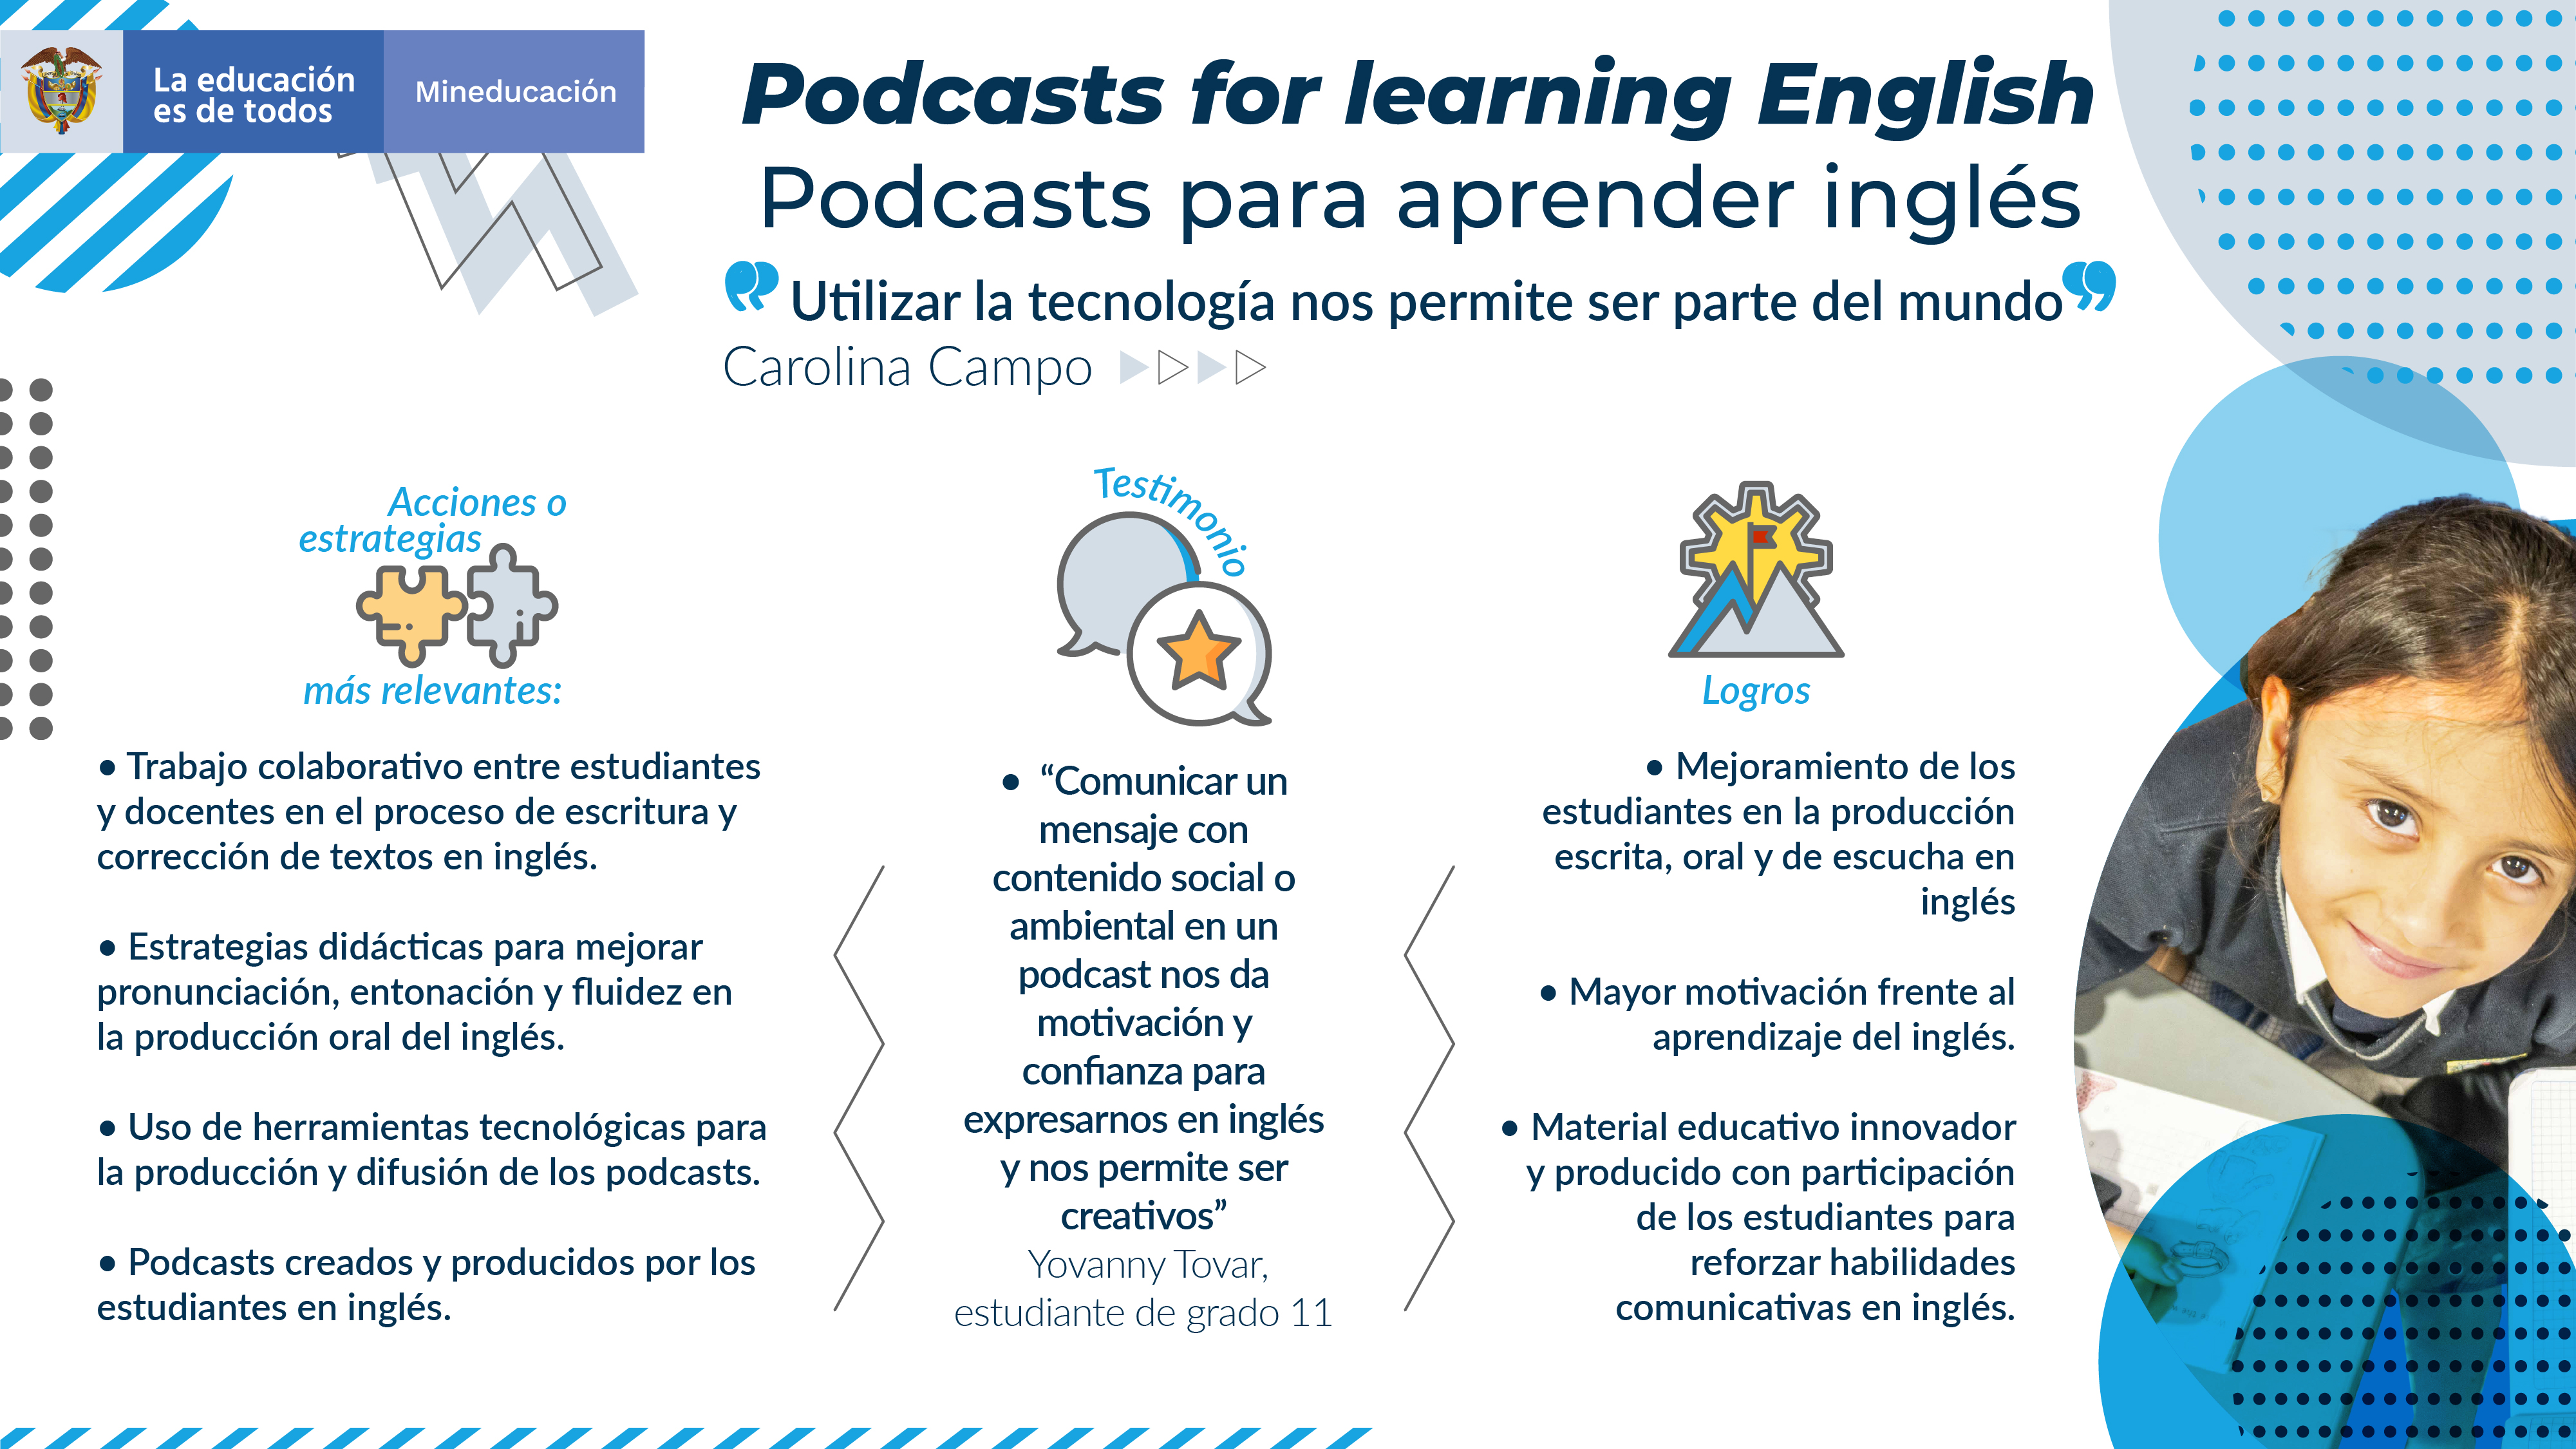  Infografía Podcasts para aprender inglés